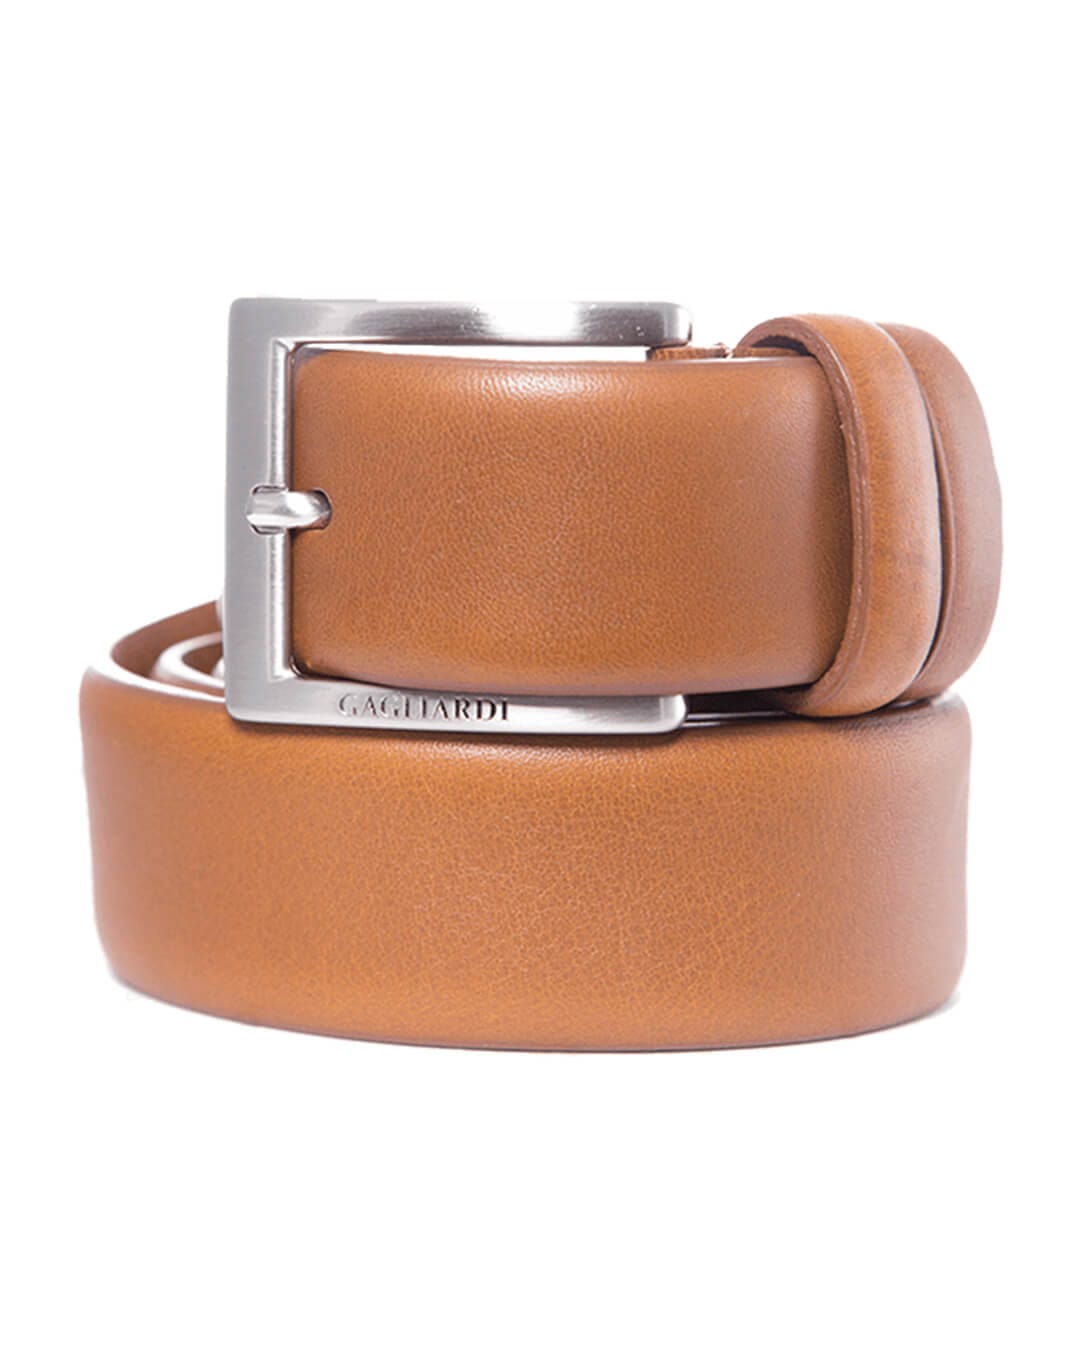 Gagliardi Belts Gagliardi  Tan Plain Leather Belt With Branding On Buckle